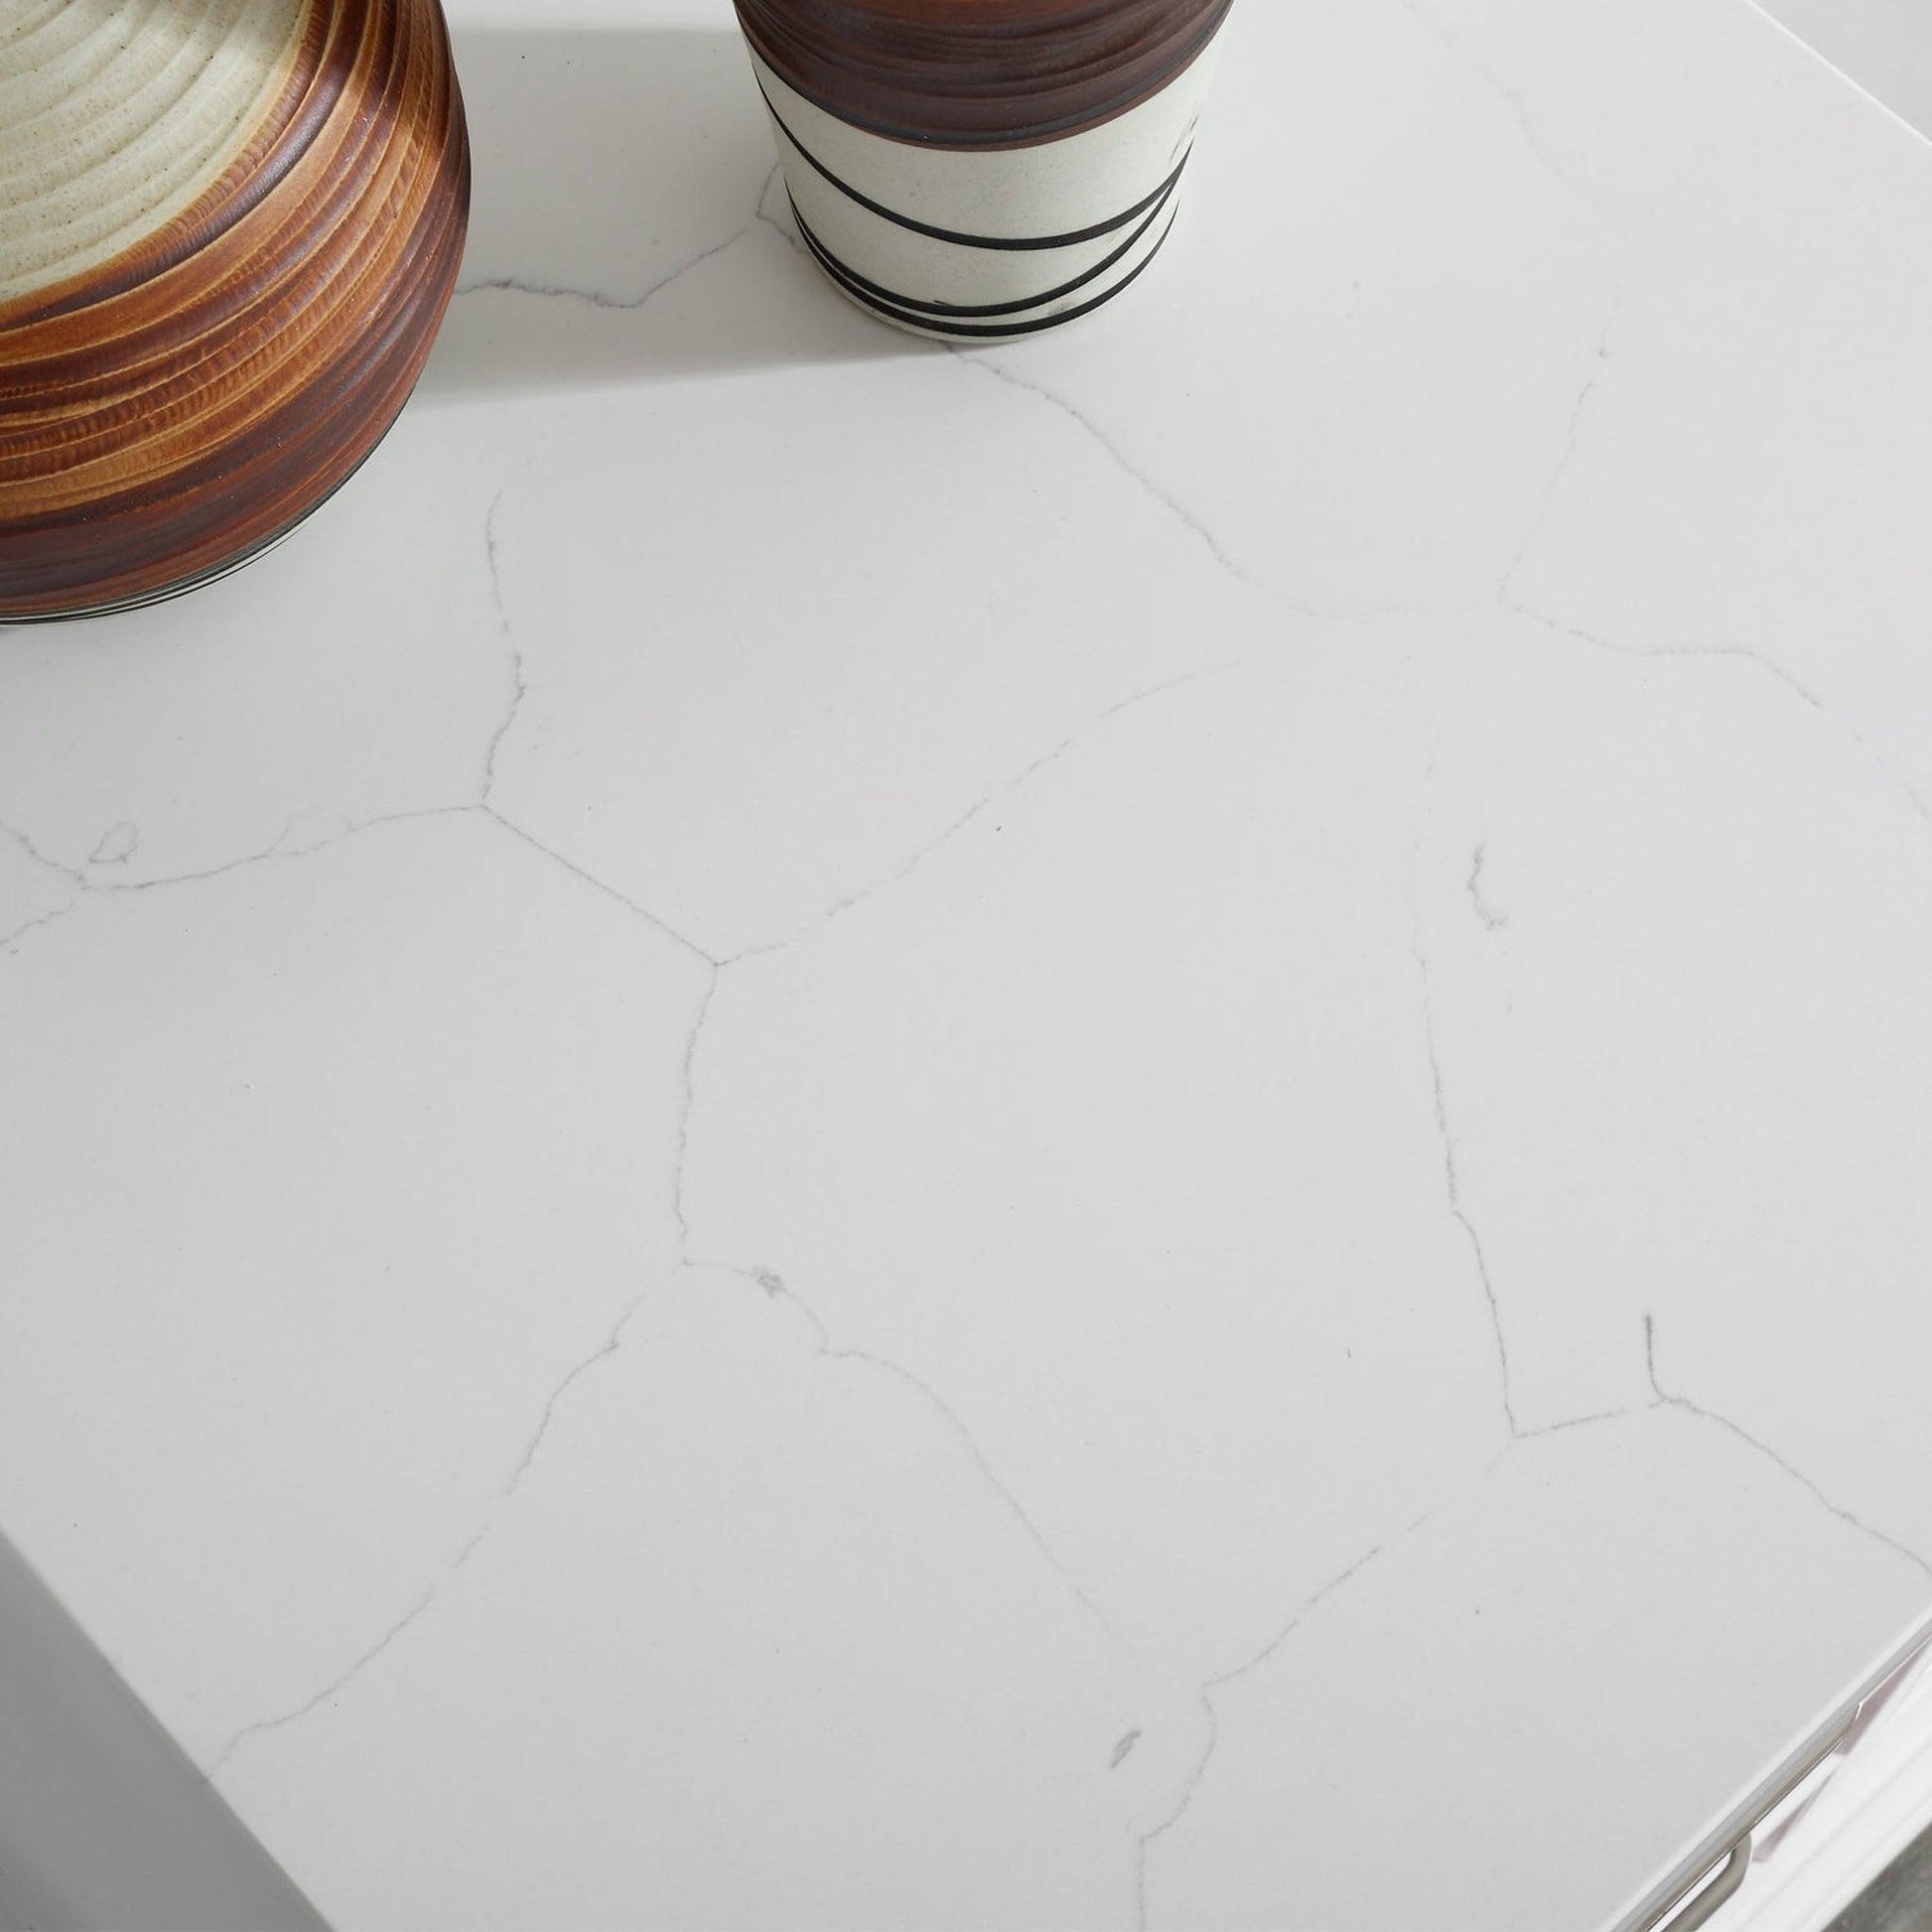 Vinnova Charlotte 60" White Freestanding Double Vanity Set In White Carrara Composite Quartz Stone Top With Undermount Ceramic Sink, Backsplash and Mirror